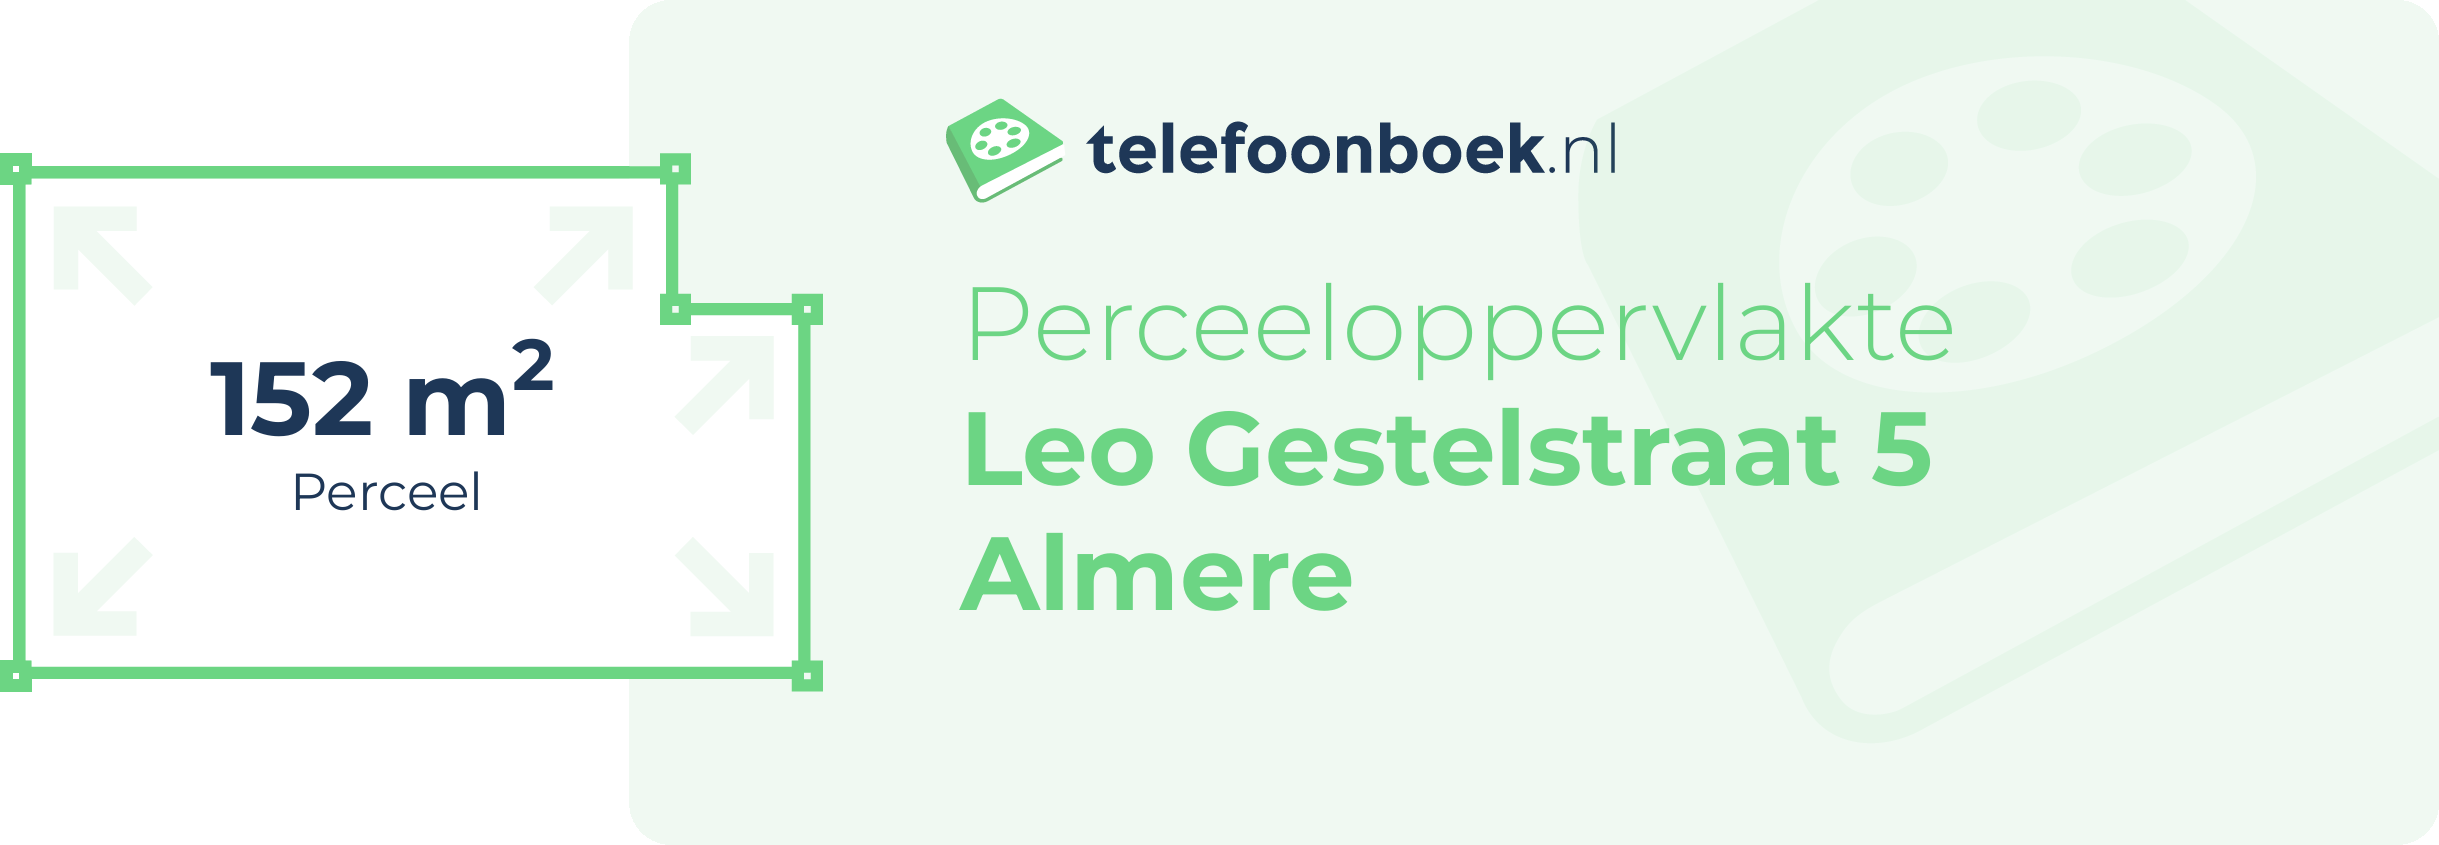 Perceeloppervlakte Leo Gestelstraat 5 Almere